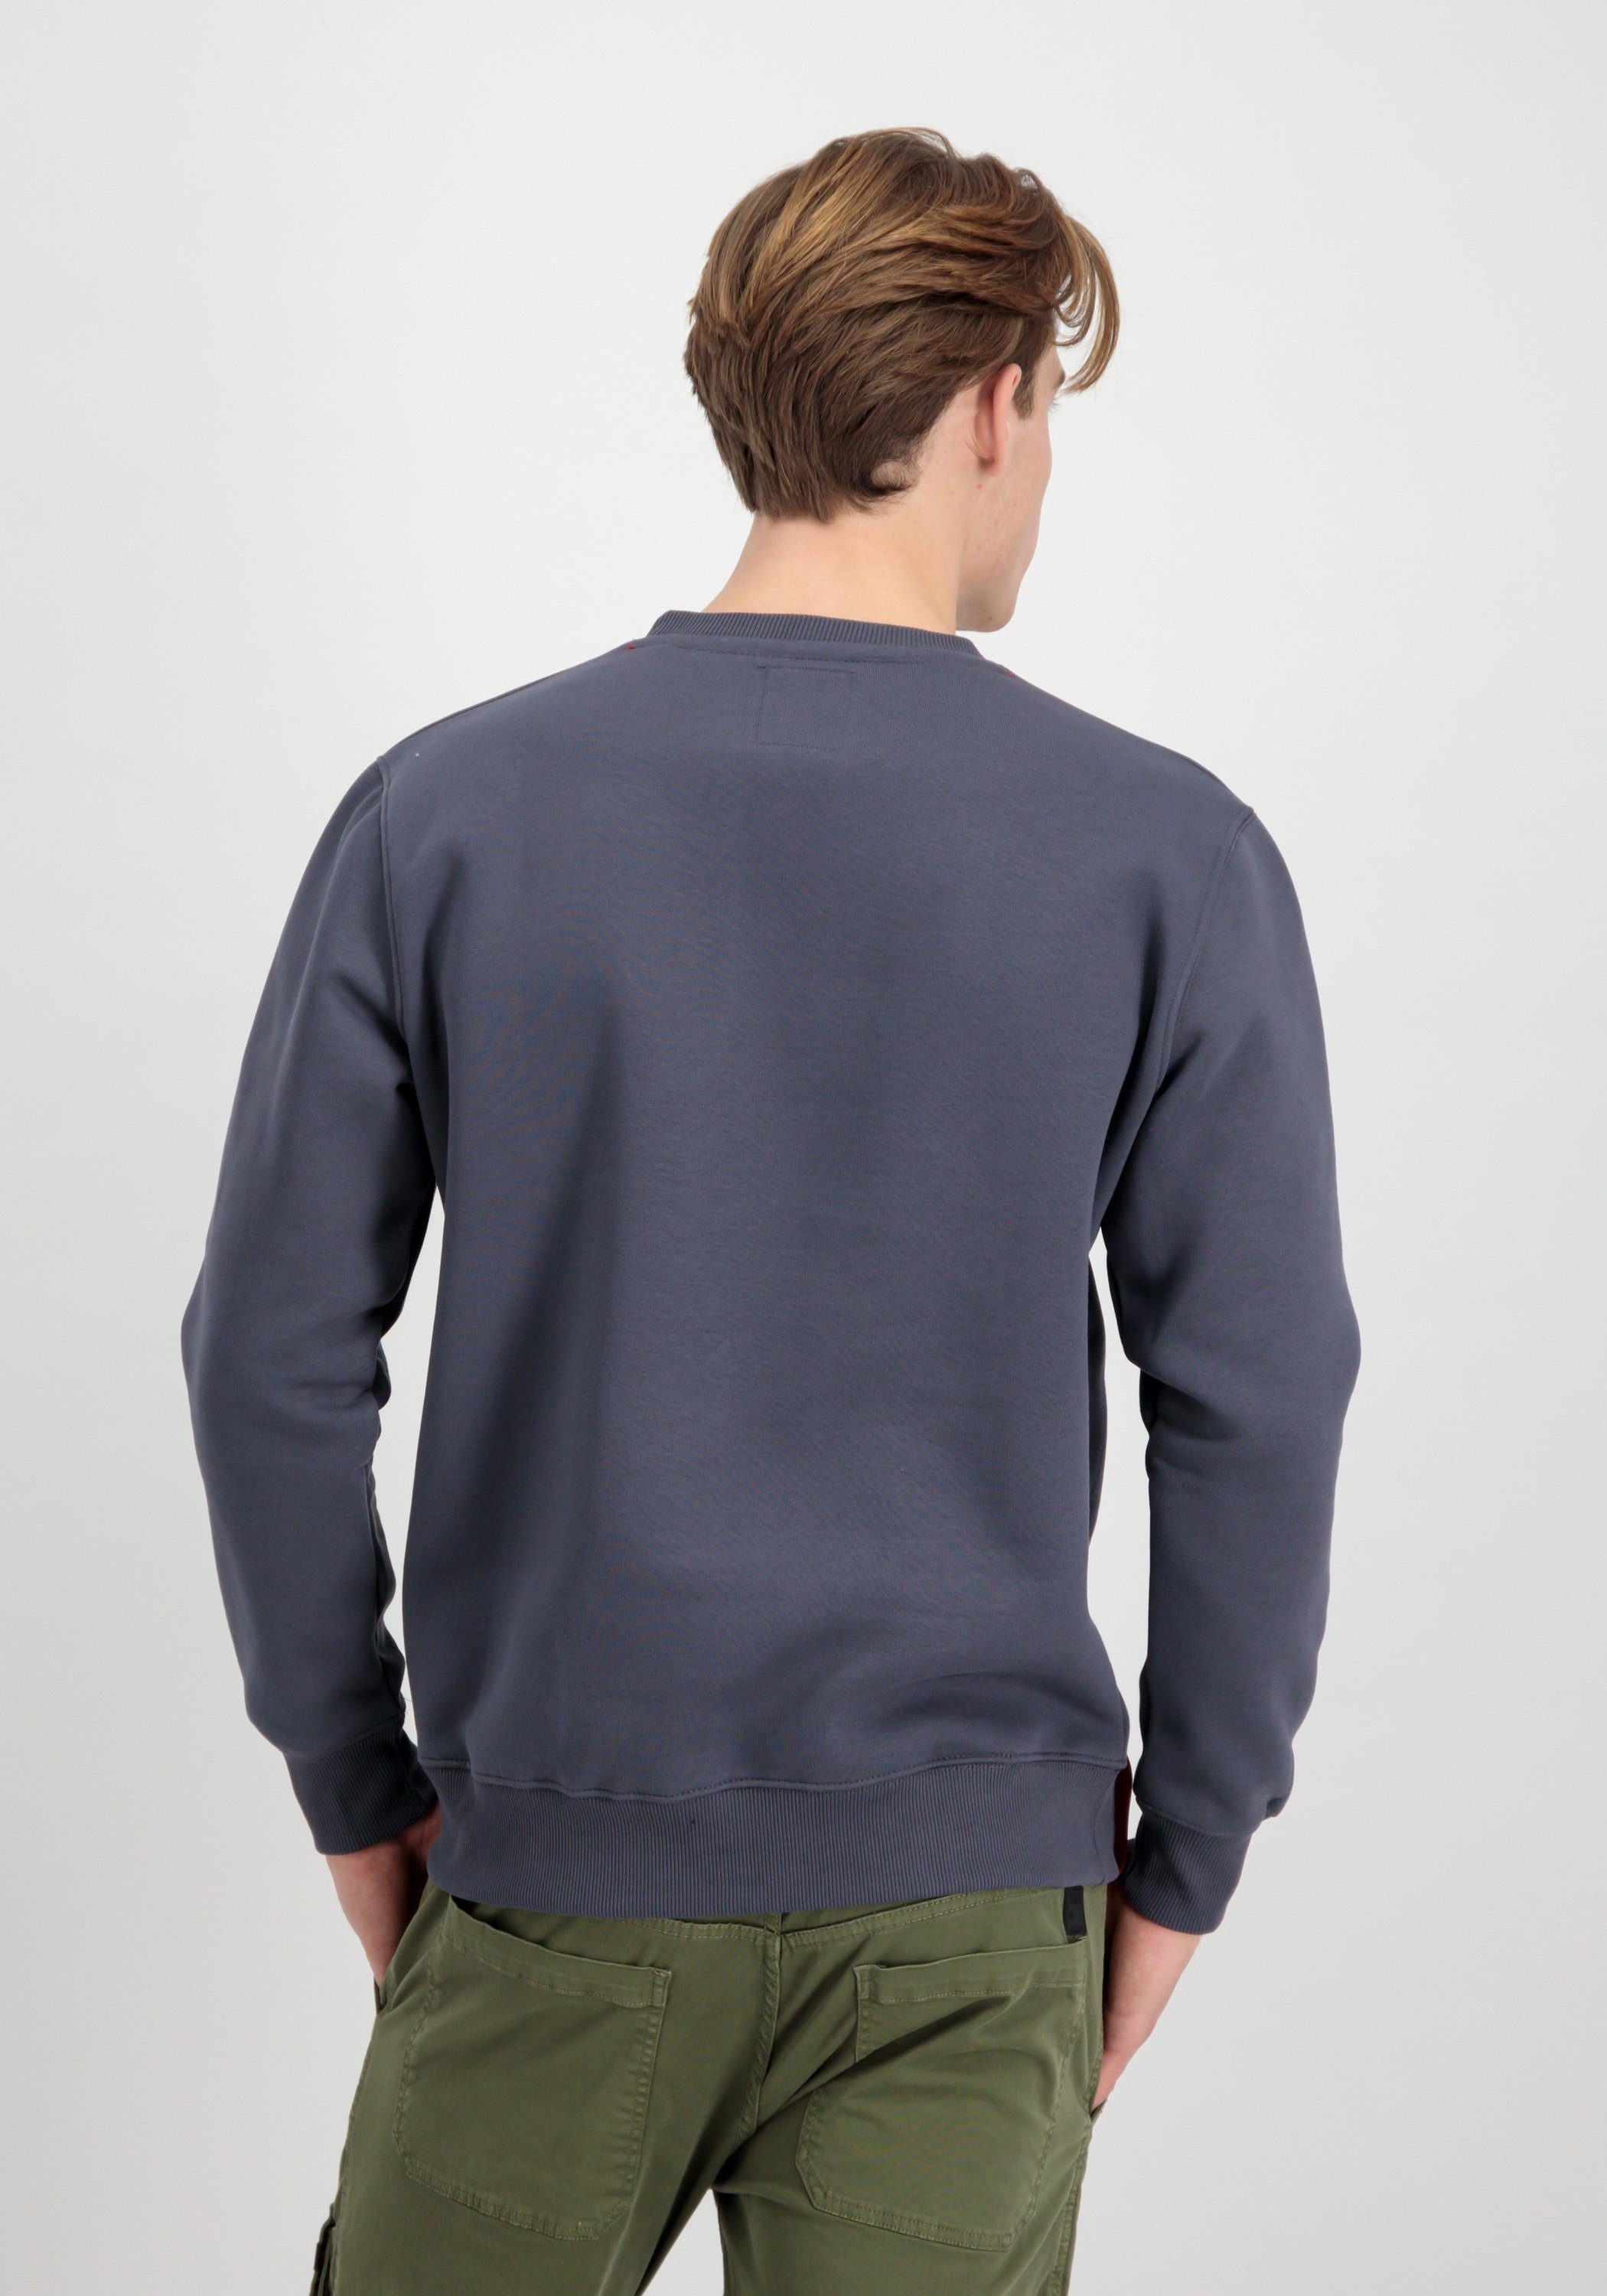 Alpha greyblack Men Sweater - Basic Sweatshirts Alpha Sweater Industries Industries